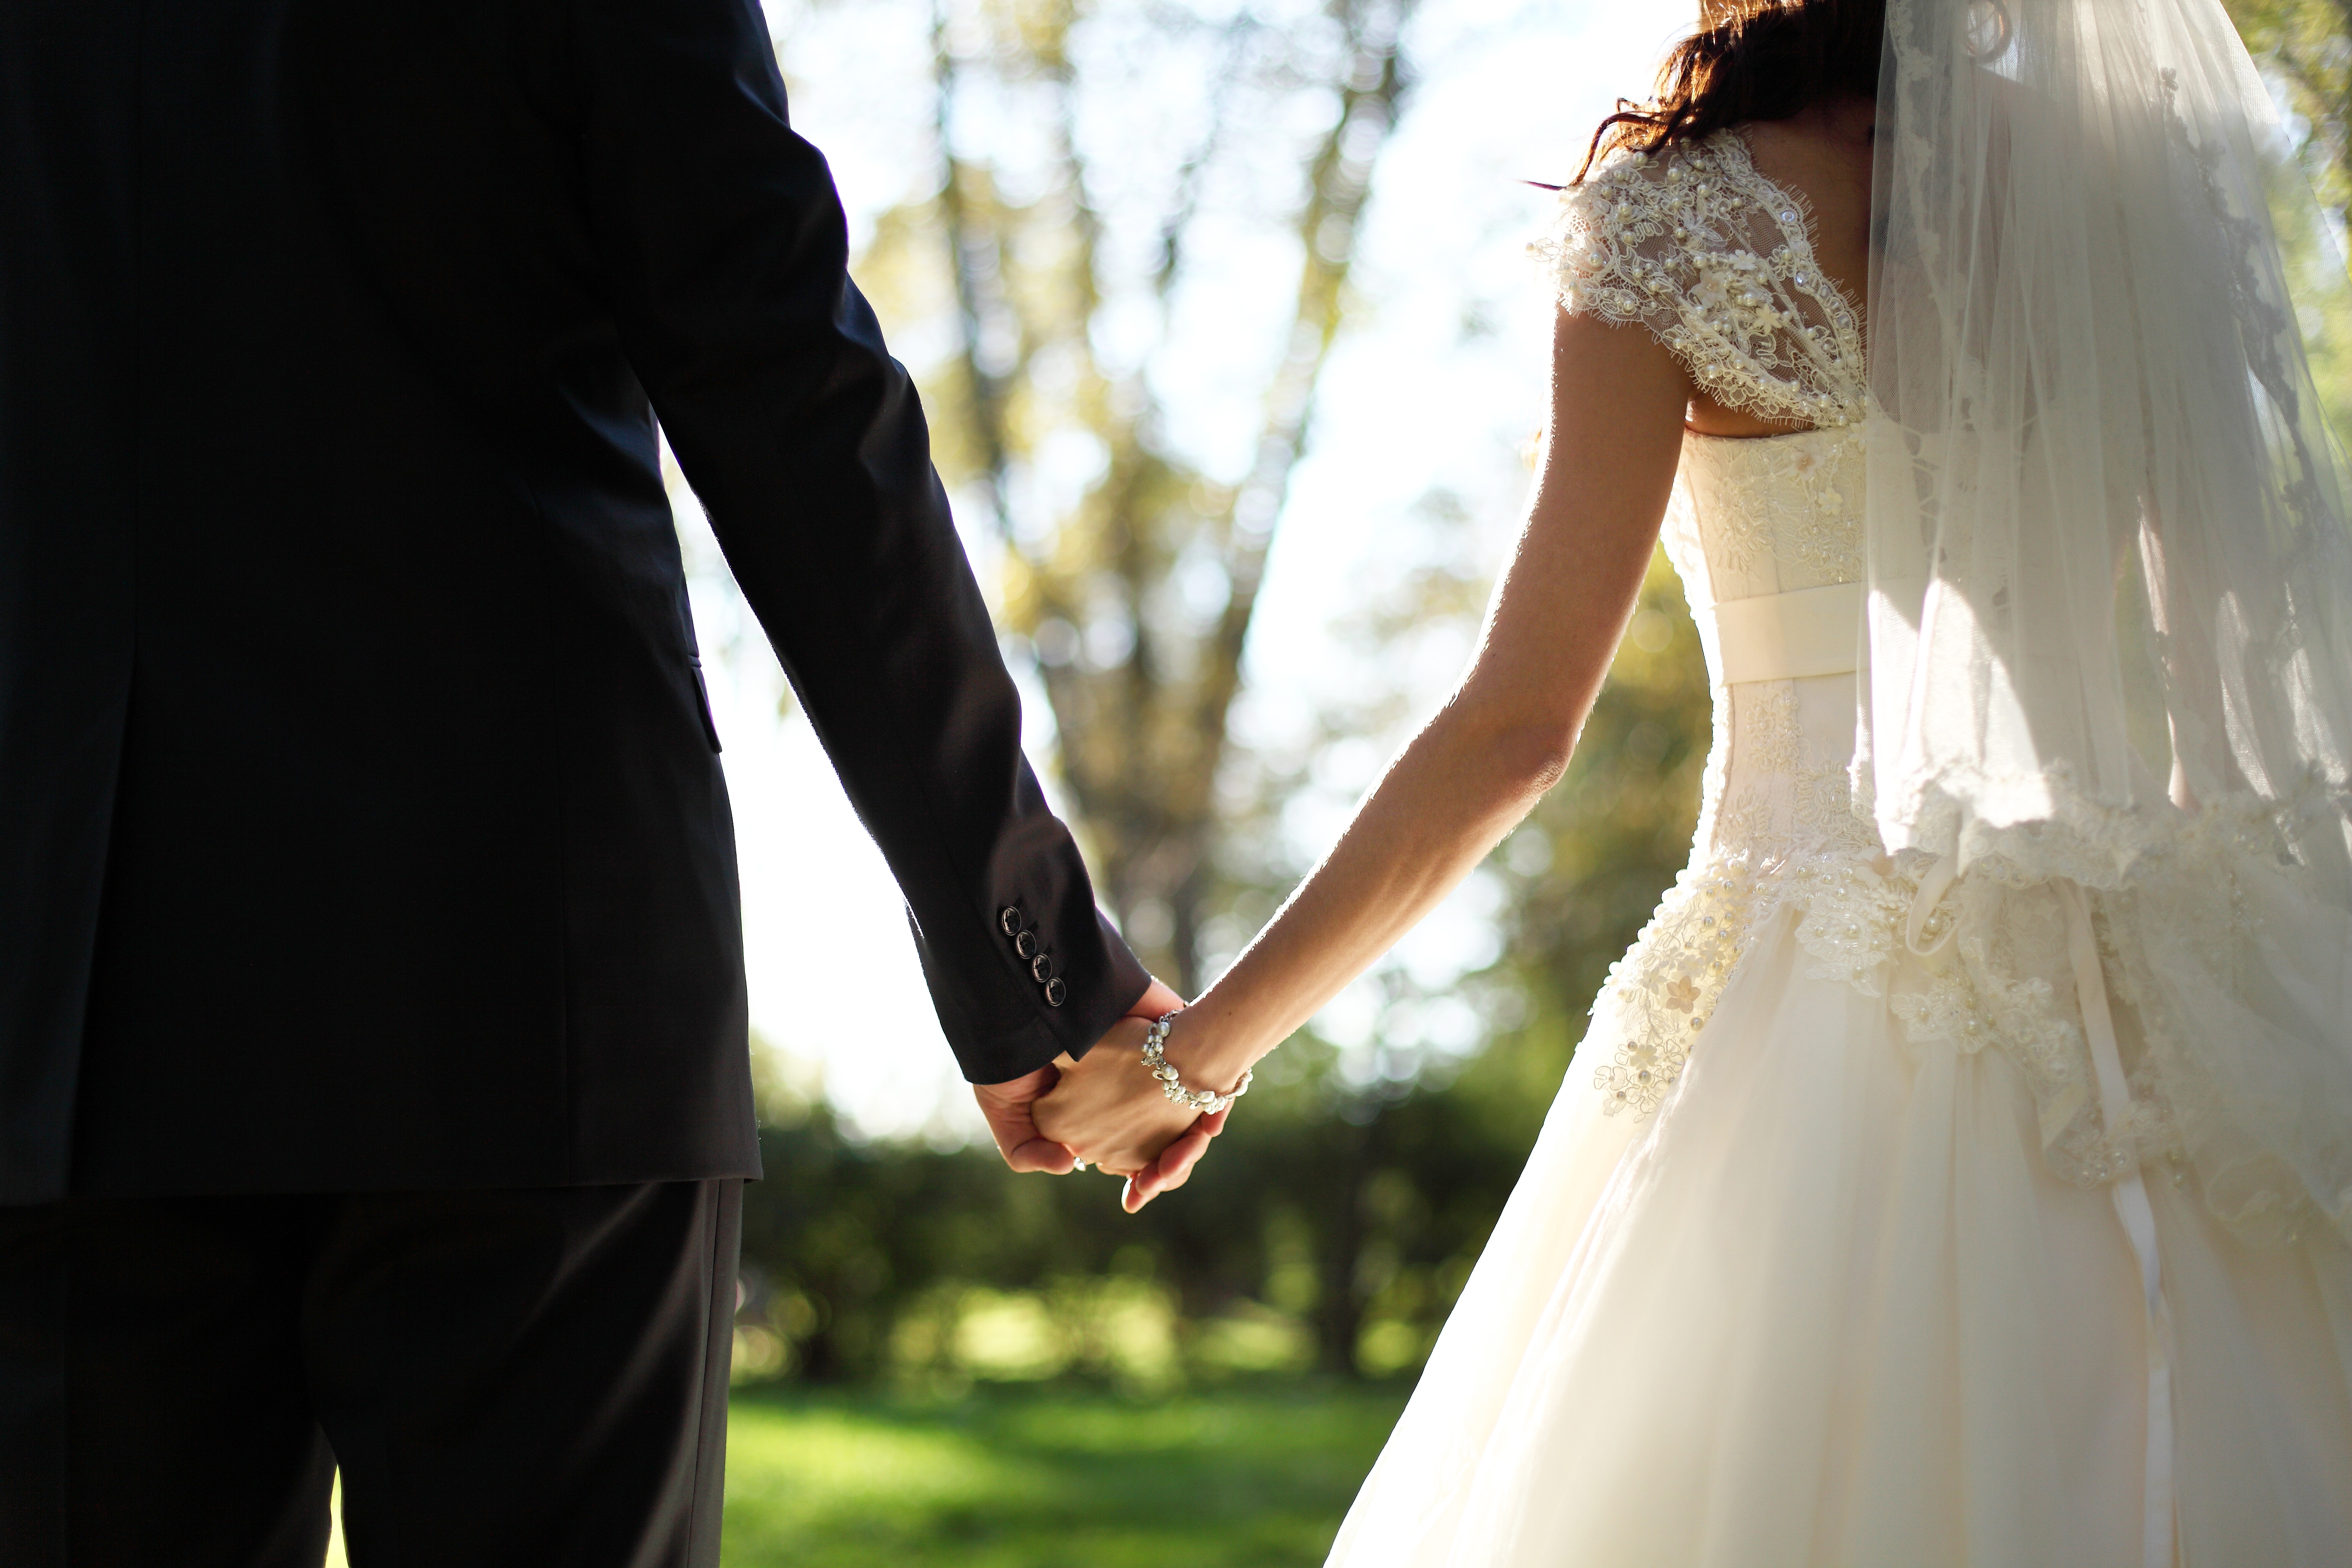 Gelderse bruidsparen besteden ruim 14.000 euro